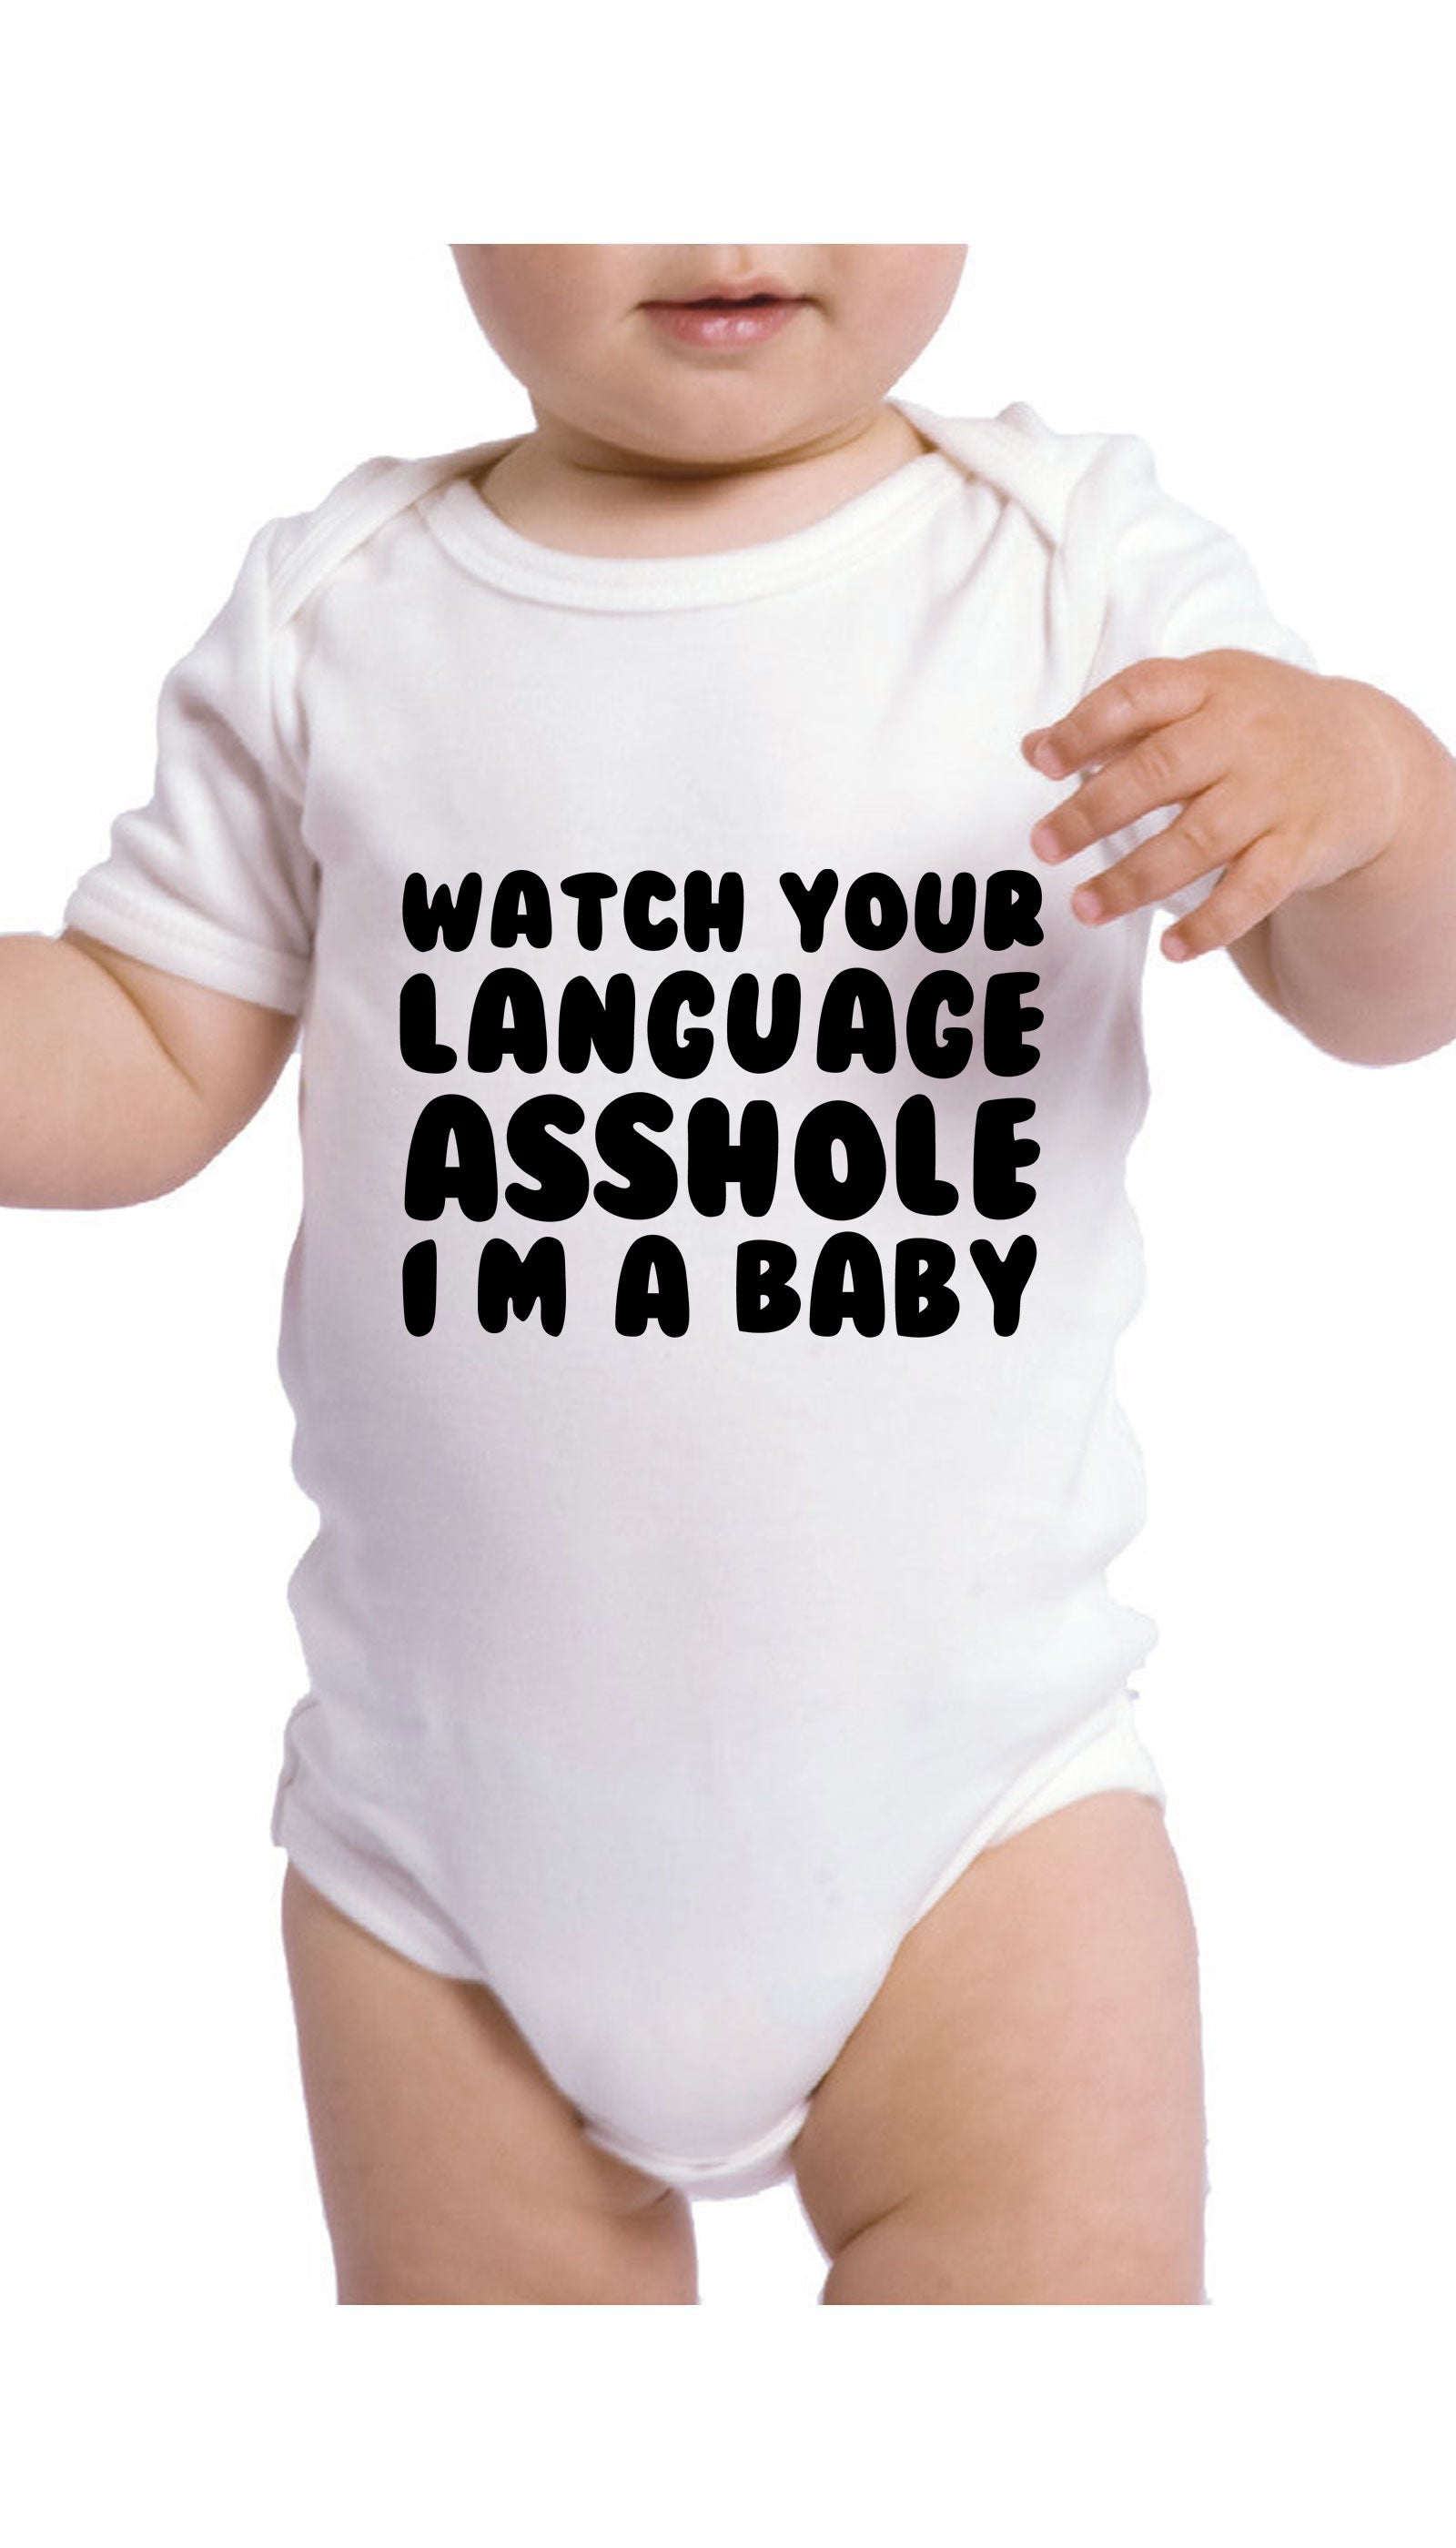 Watch Your Language Asshole Infant Onesie